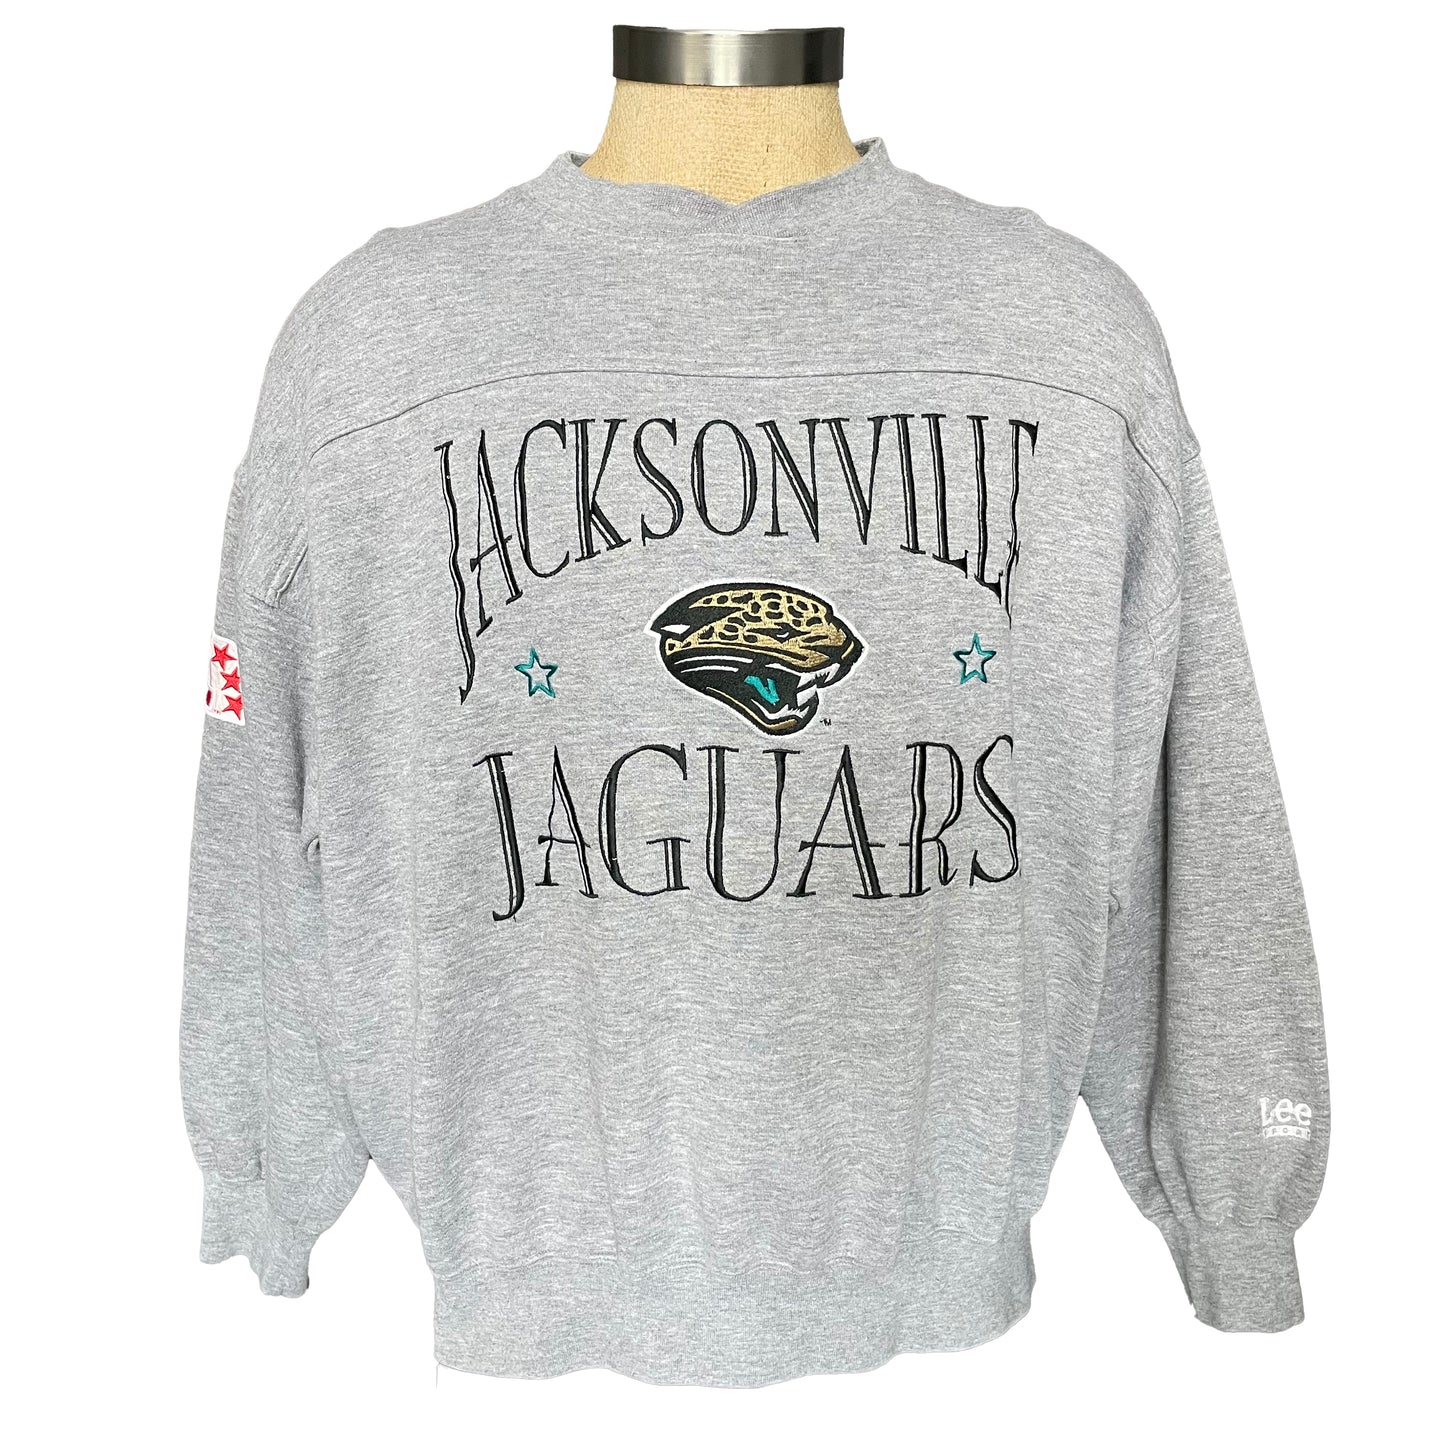 Vintage Jacksonville Jaguars embroidered sweatshirt size XL